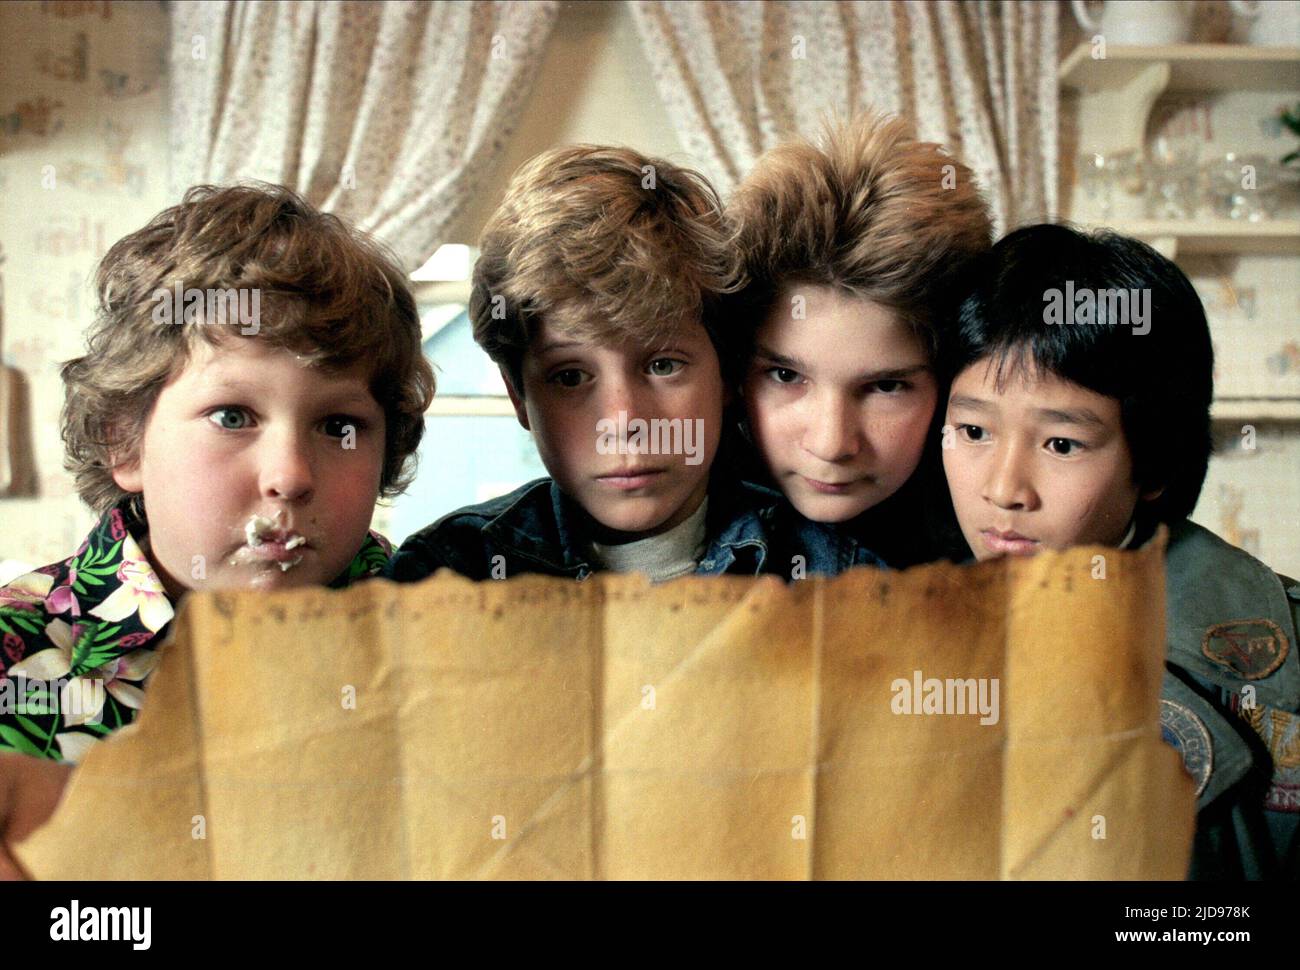 COHEN,ASTIN,FELDMAN,QUAN, THE GOONIES, 1985, Stock Photo